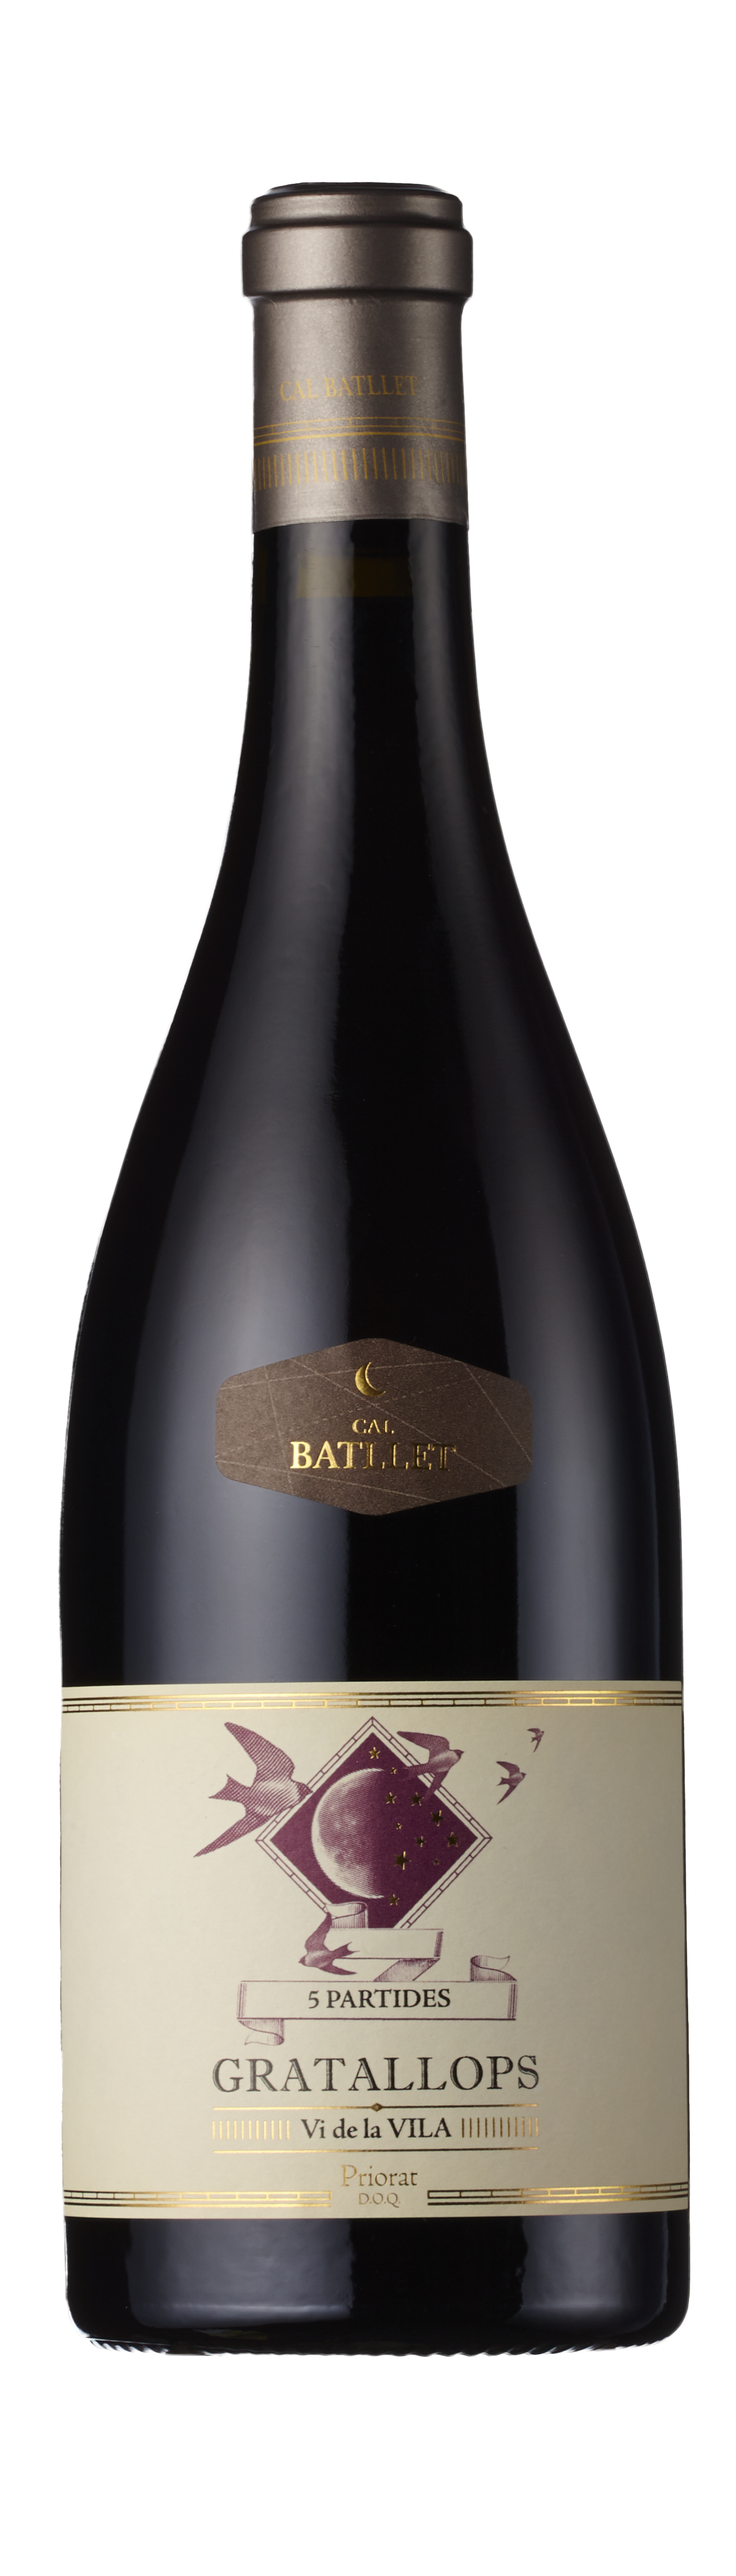 Bottle shot - Cal Batllet-Marc Ripoll, Gratallops 5 Partides, DOQ Priorat, Spain